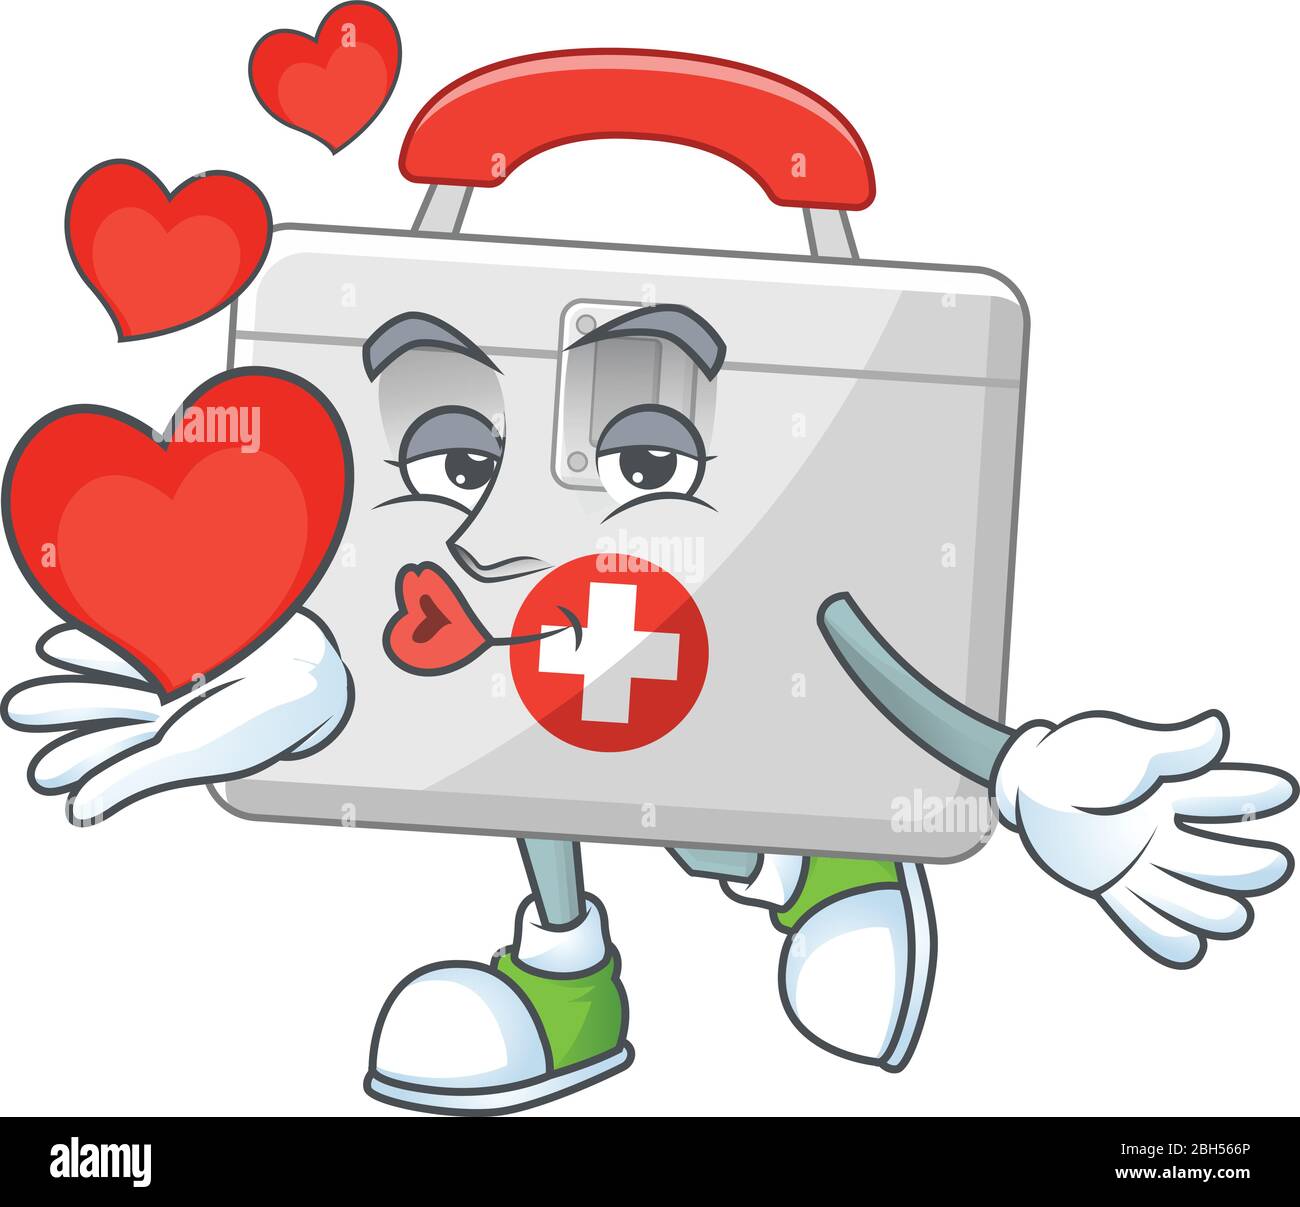 Un adorable diseño de dibujos animados de botiquín de primeros auxilios con  corazón Imagen Vector de stock - Alamy